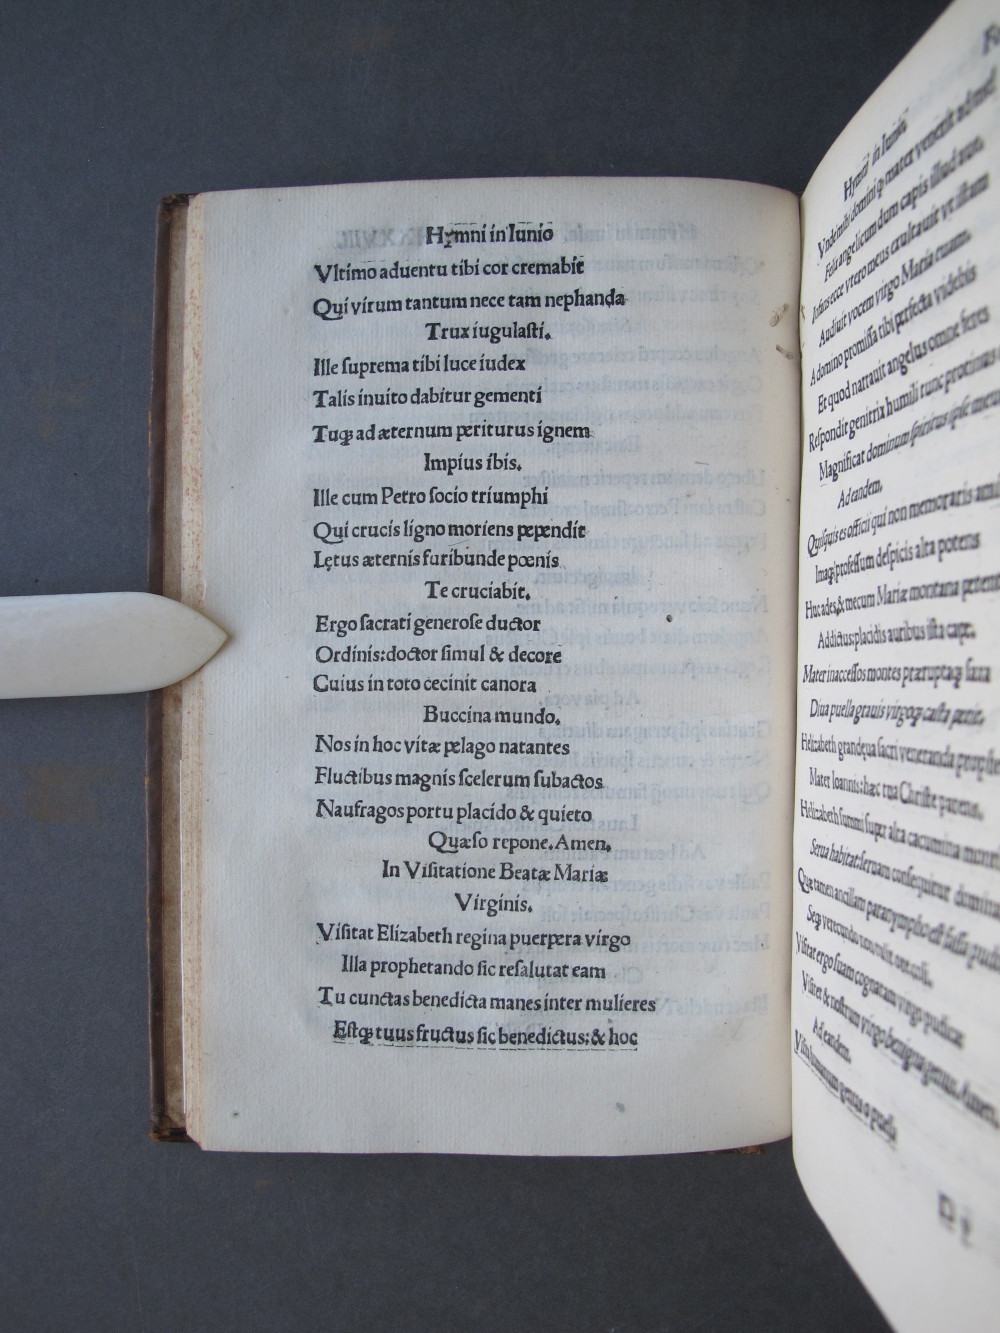 Folio 28 verso